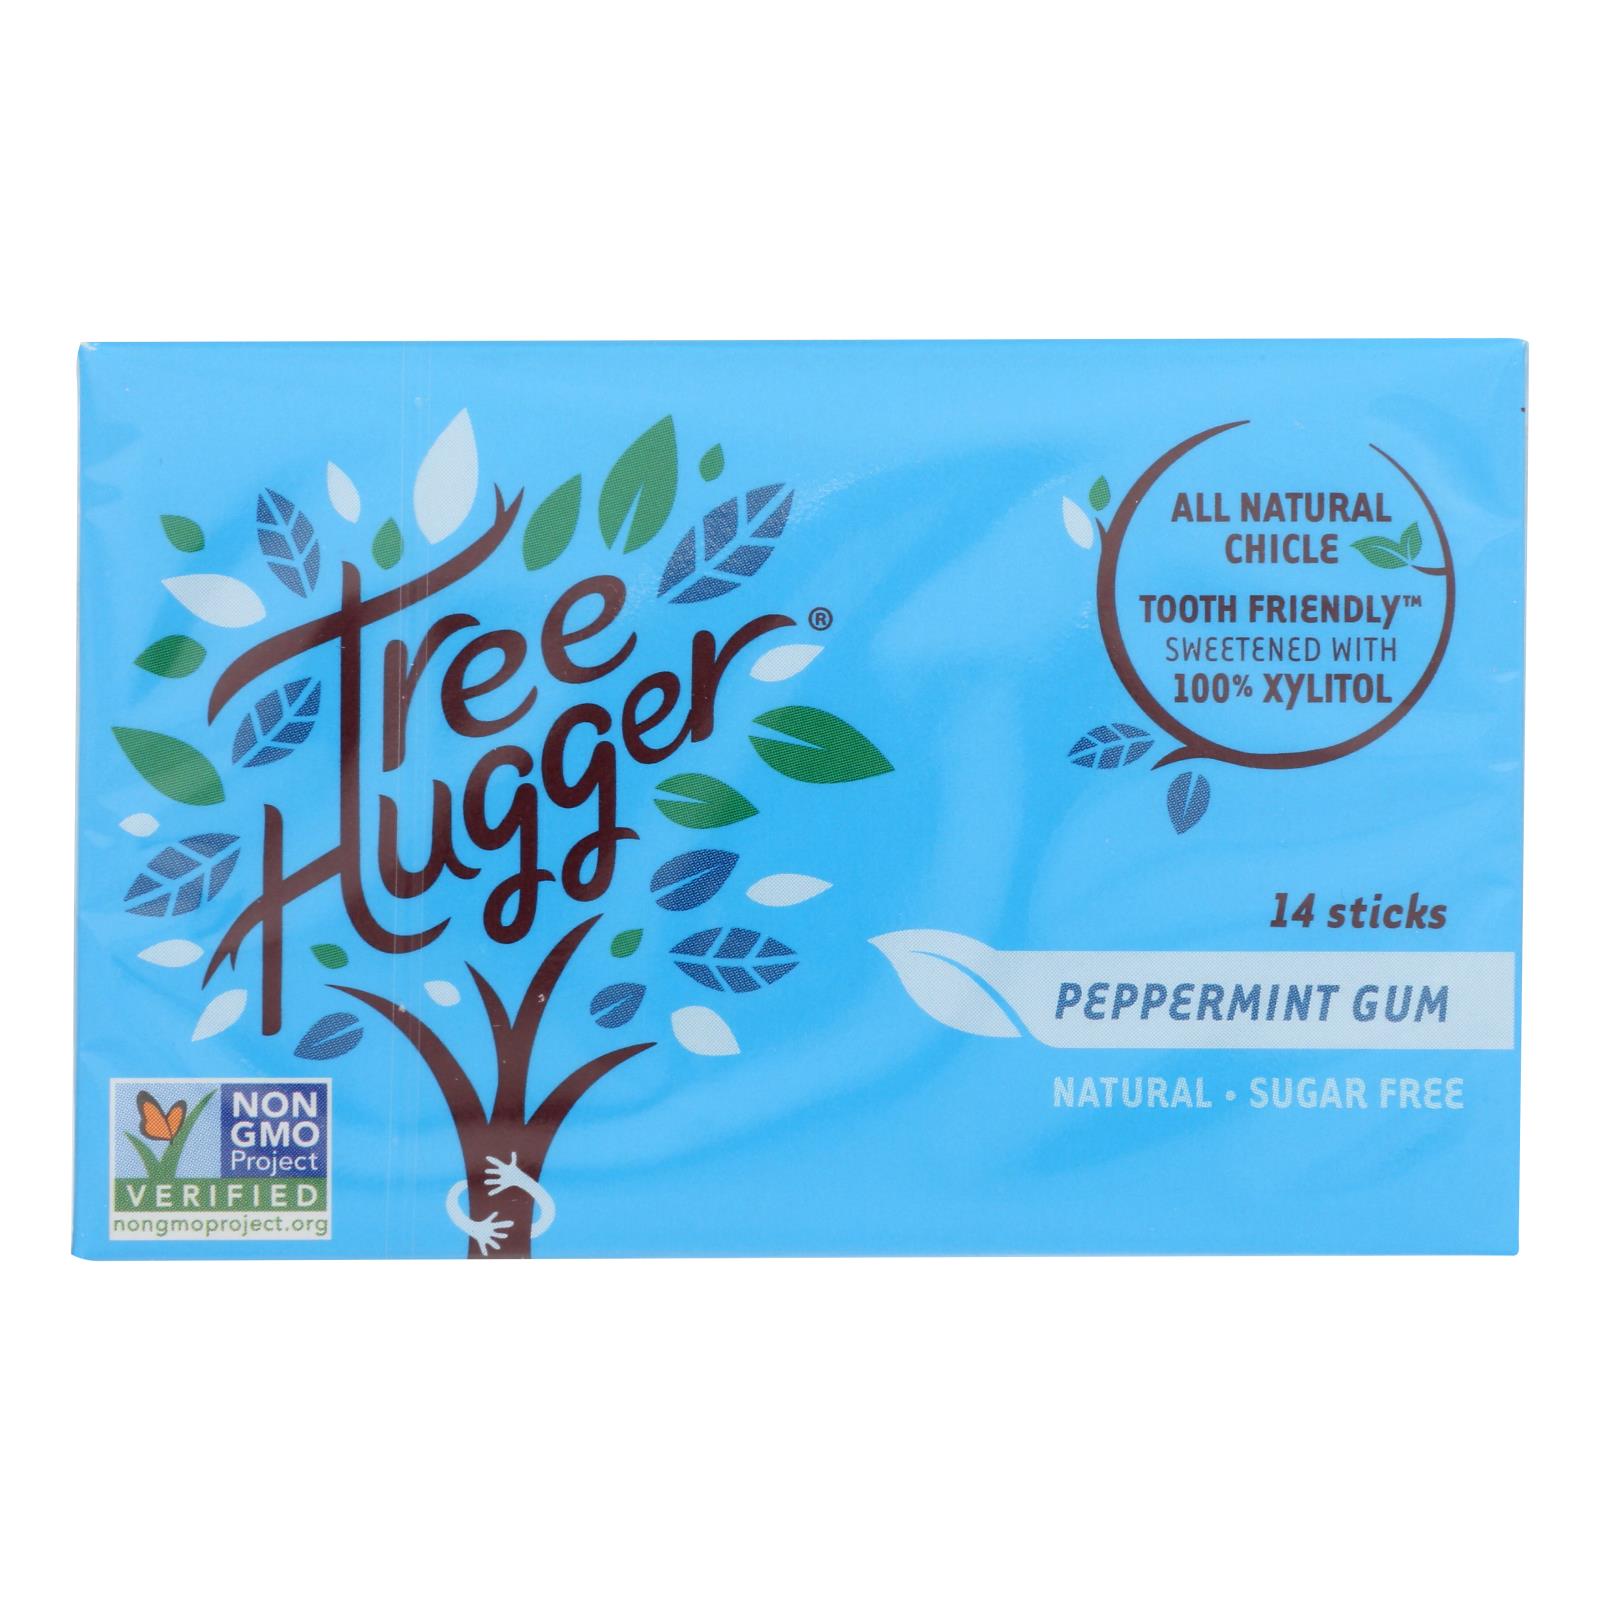 Tree Hugger - Gum Peppermint Xylitol - 12개 묶음상품 - 14 CT